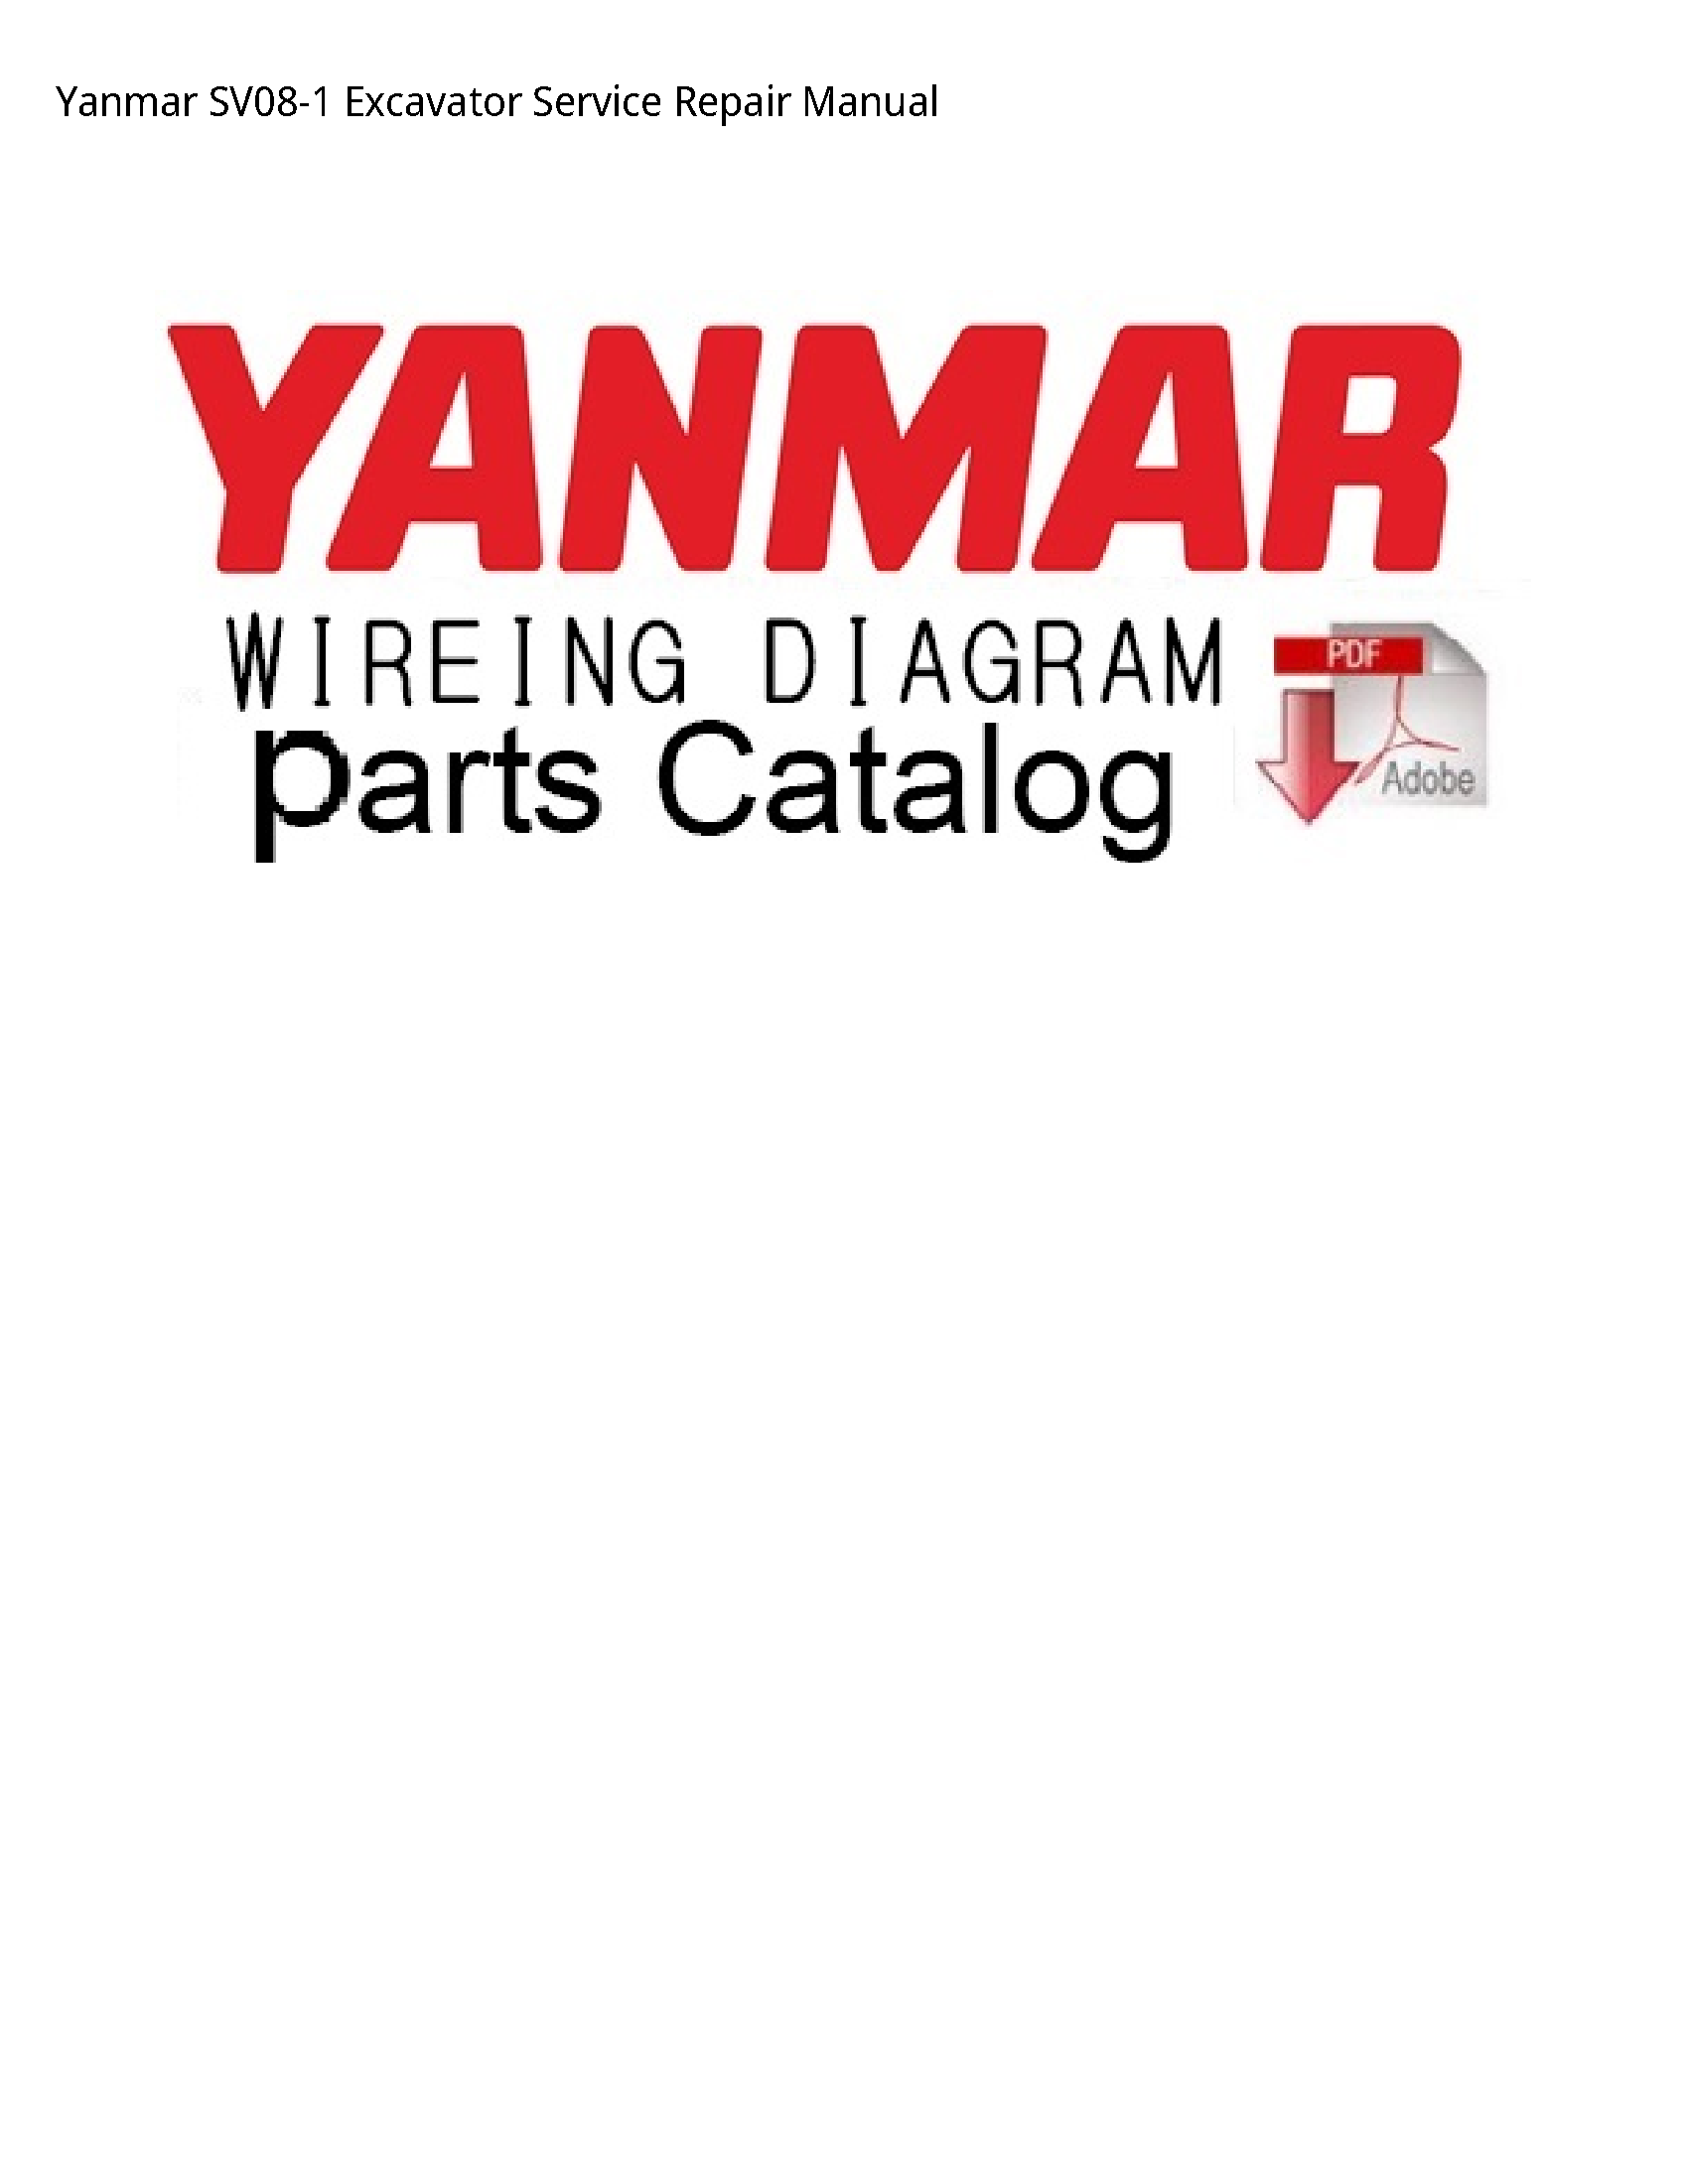 Yanmar SV08-1 Excavator manual